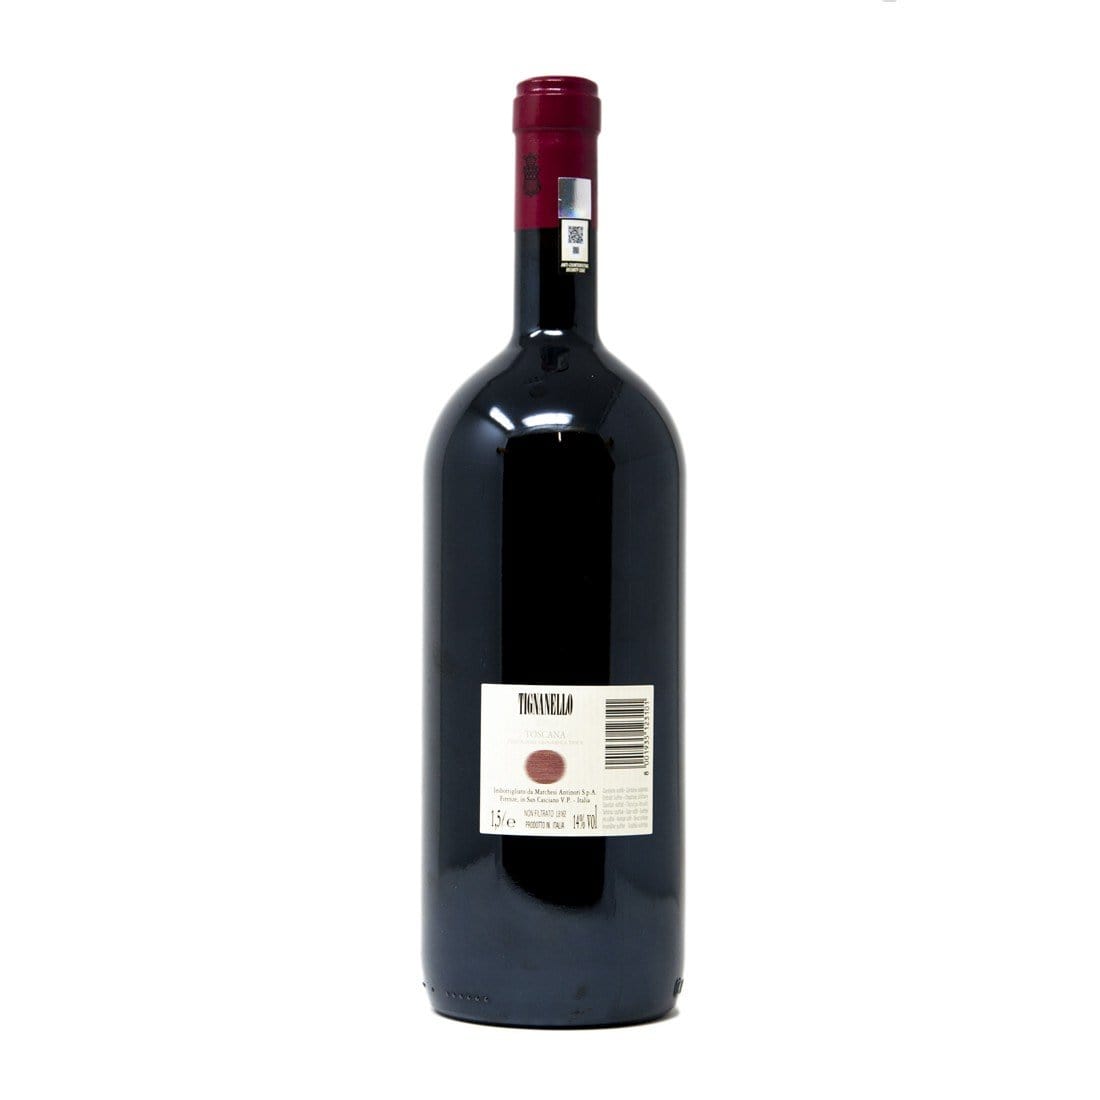 Tignanello 2019 Toscana Rosso Igt Magnum - Antinori-Vinolog24.com